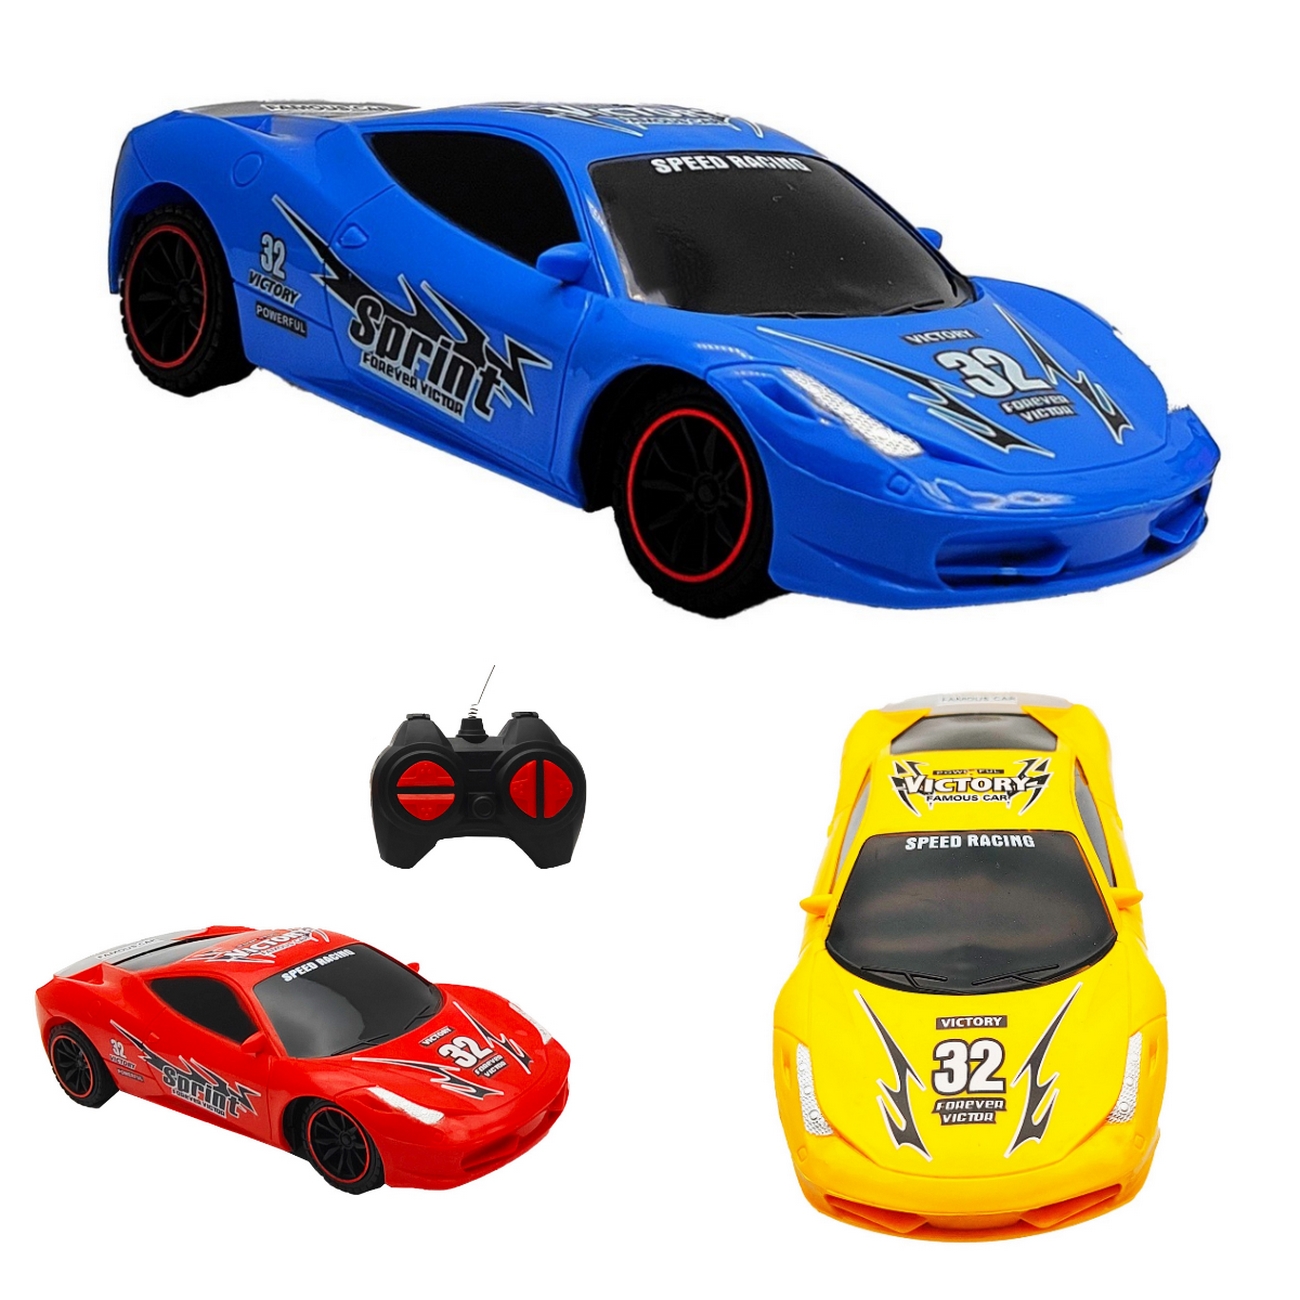 Carro Racing Recargable Juguete Niños Control + Baterias